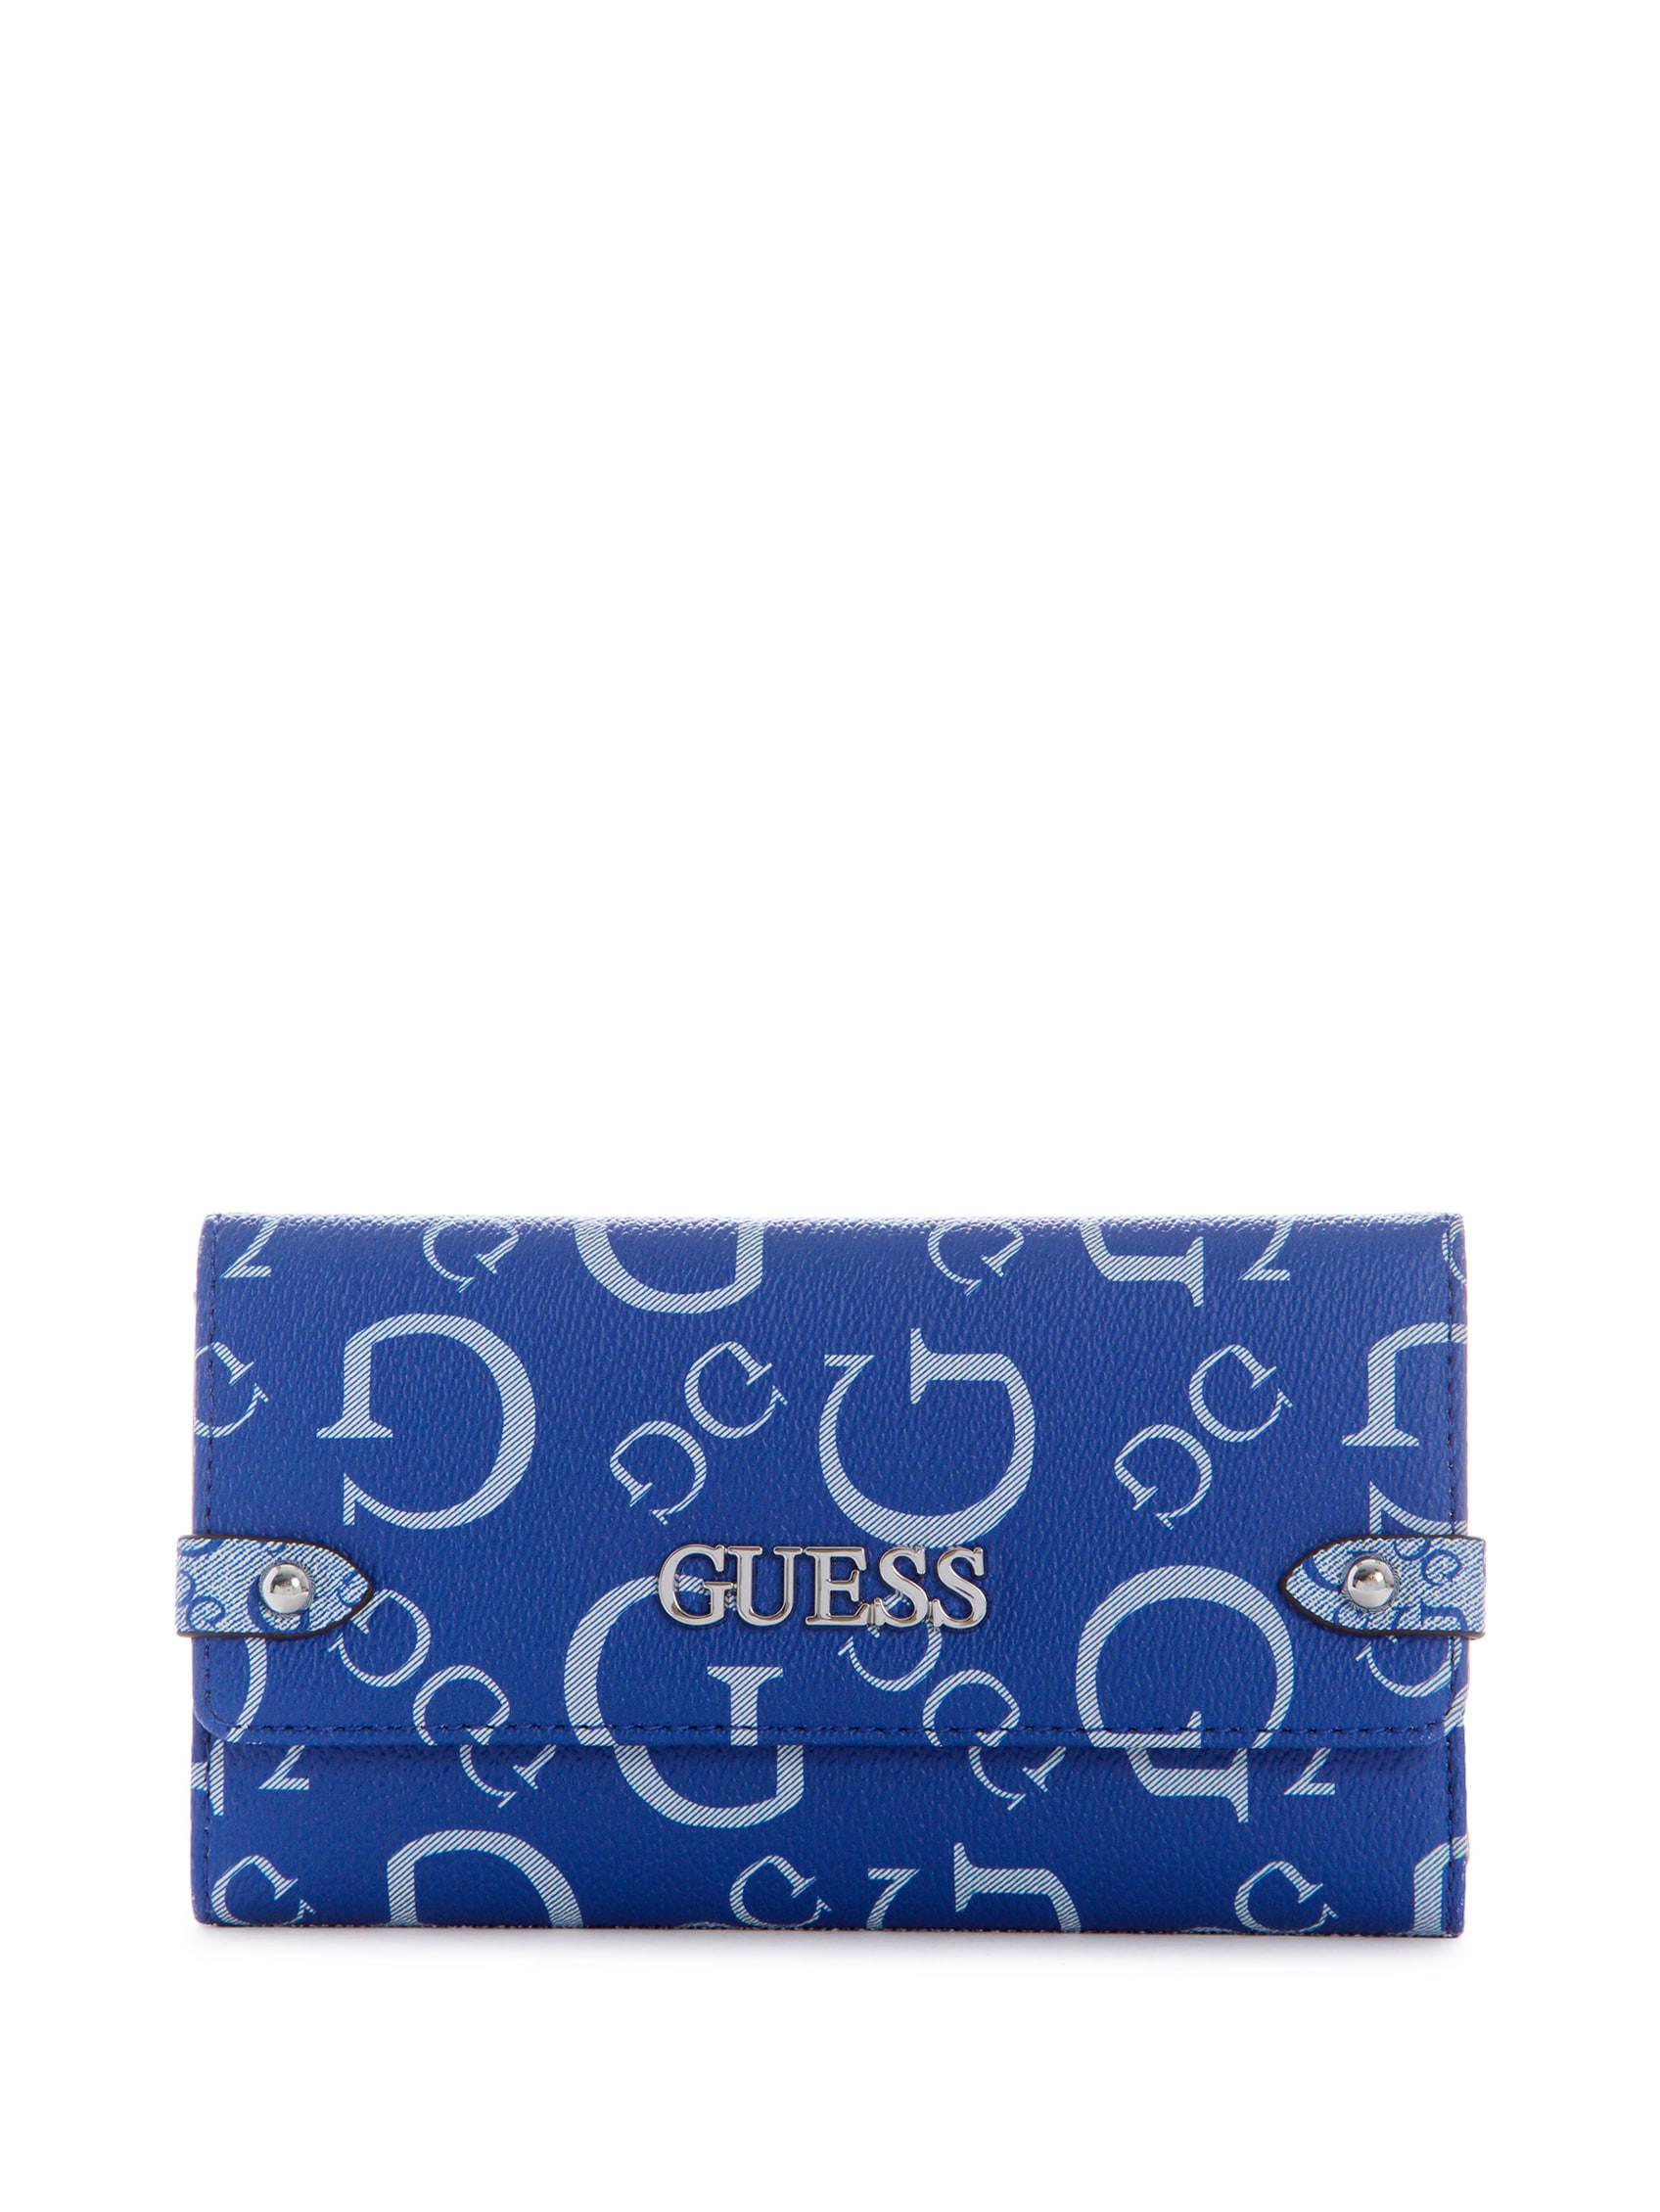 Guess Factory Keston Logo Slim Clutch in Blue | Lyst